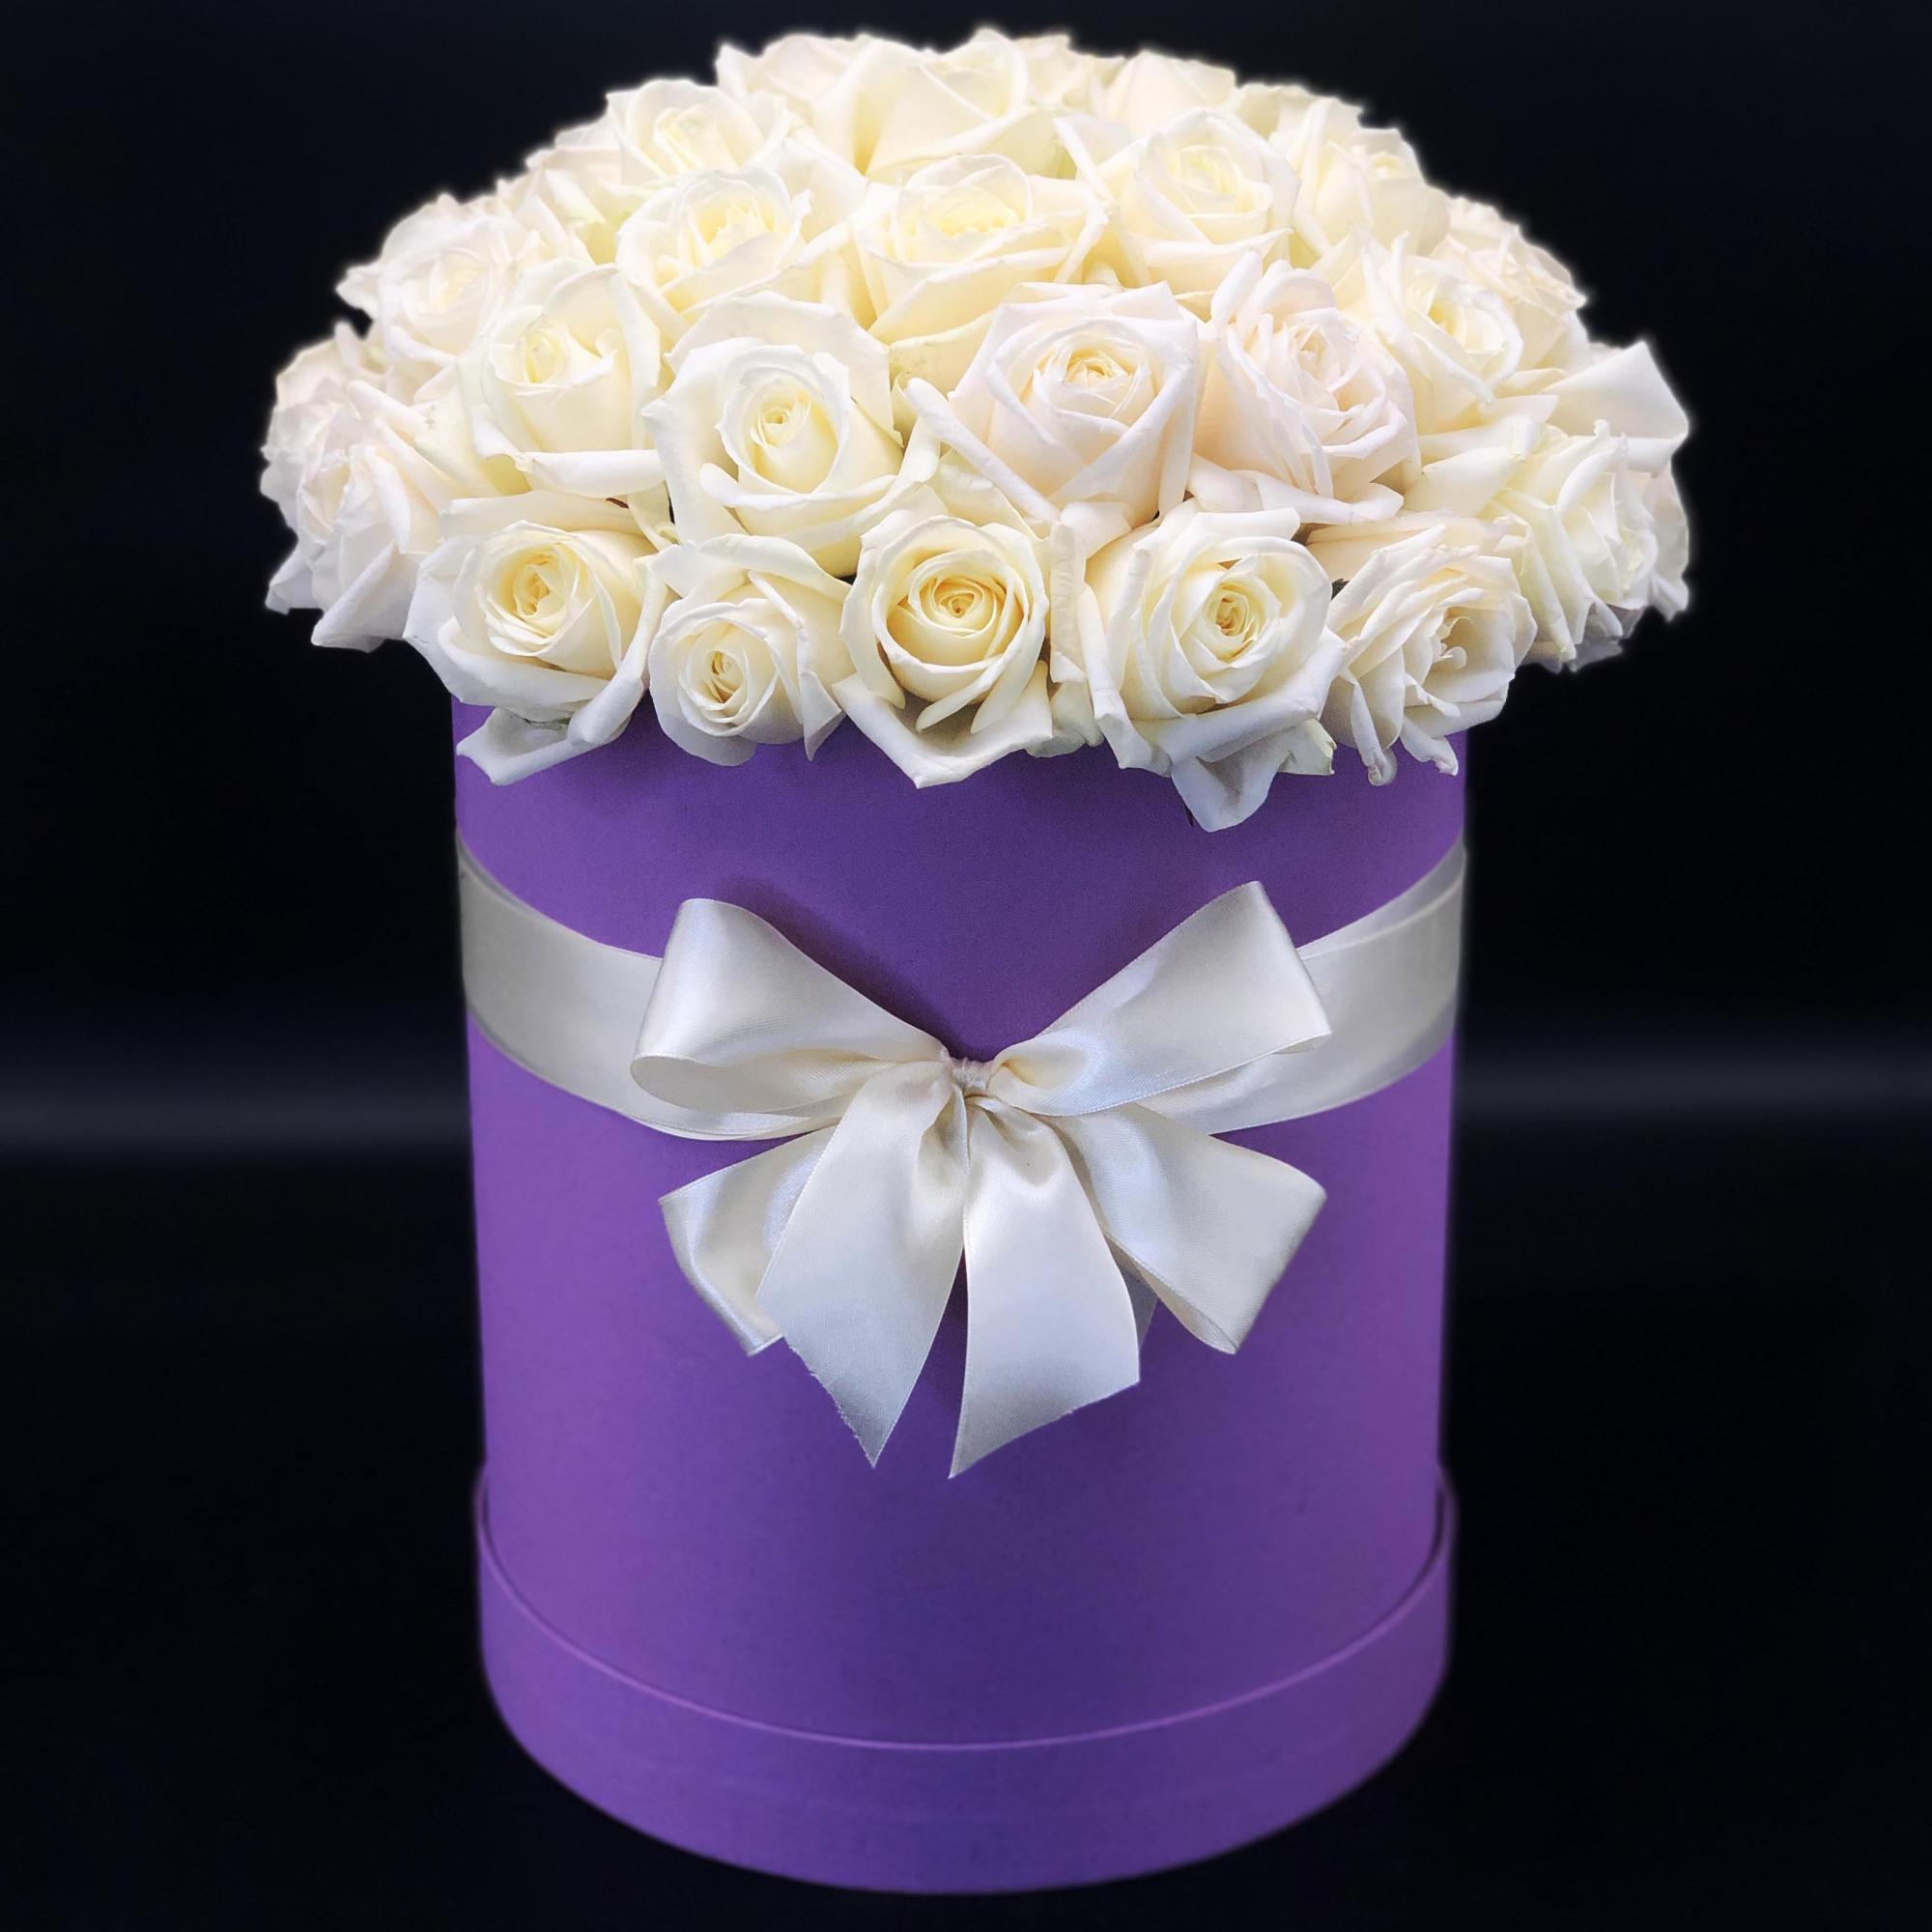  Belek Flower Order 29 White Roses in a purple box 